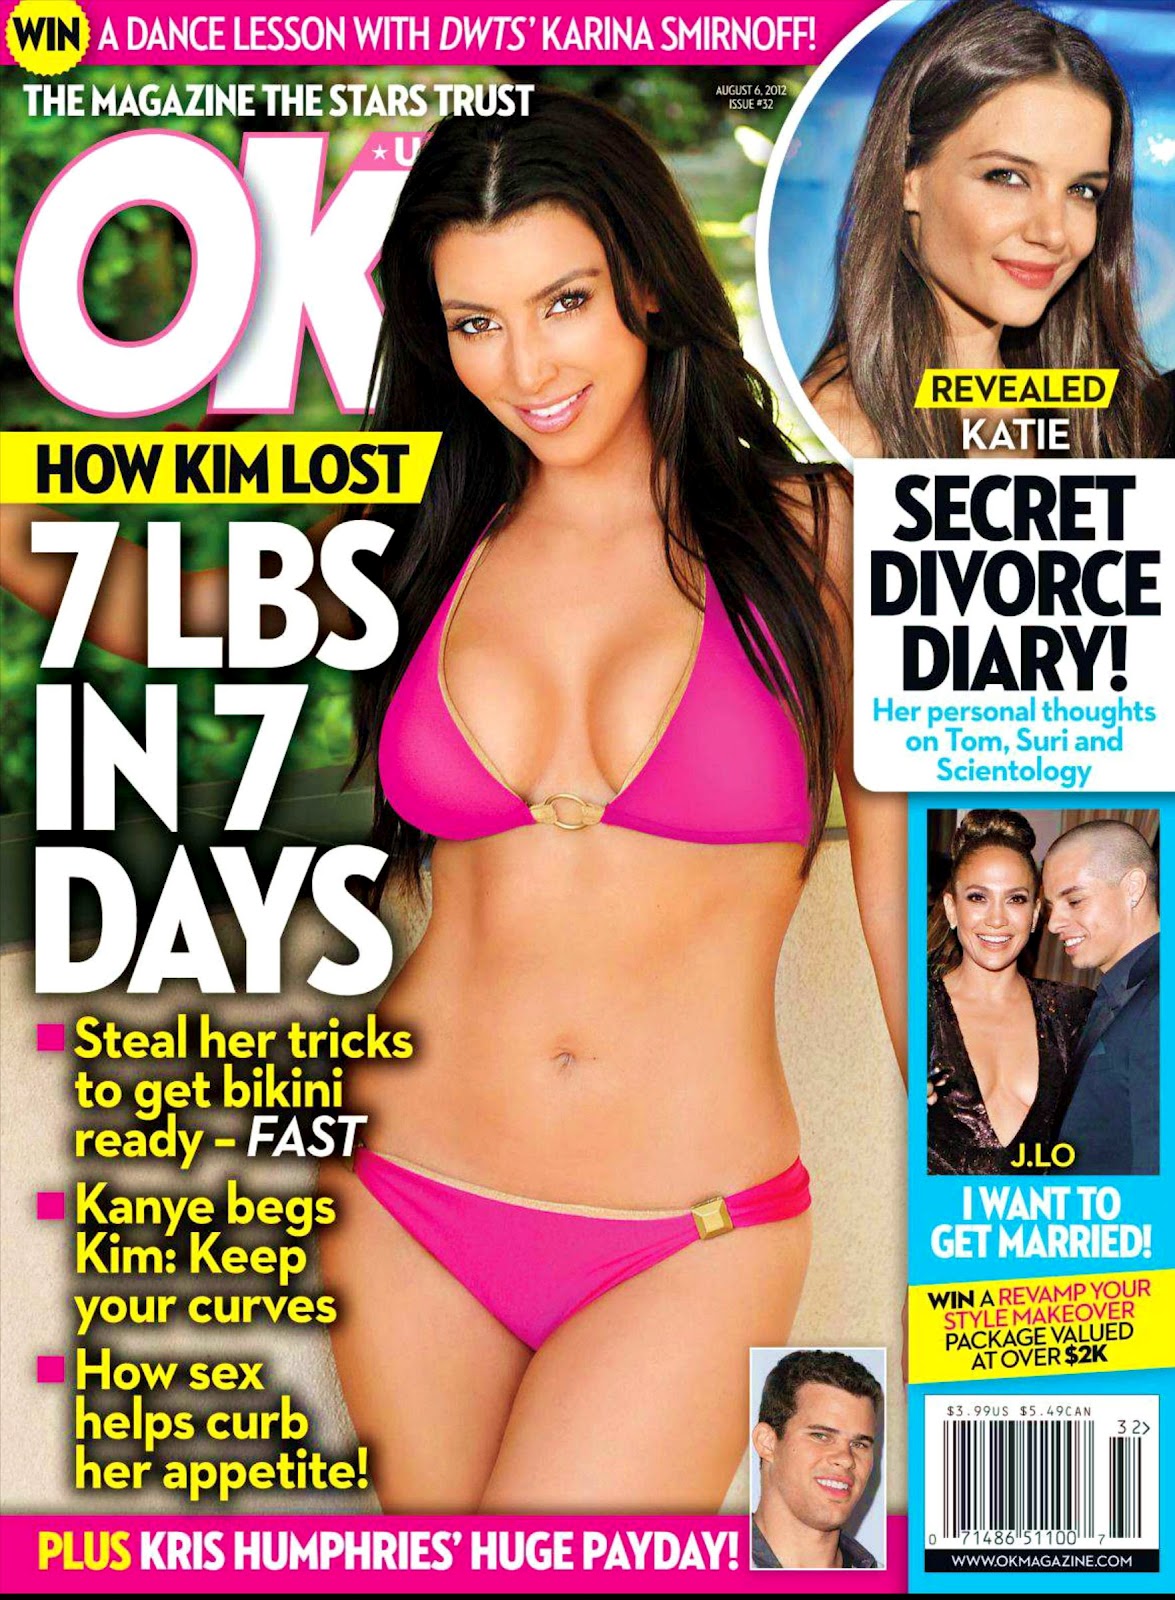 http://2.bp.blogspot.com/-v2Dw9YLCWeI/UFDuR96StAI/AAAAAAAABco/QQgNPKIZs10/s1600/Kim+Kardashian+in+Green+and+Pink+Bikinis+-+OK!+Magazine+Cover,+August+2012+1.jpg